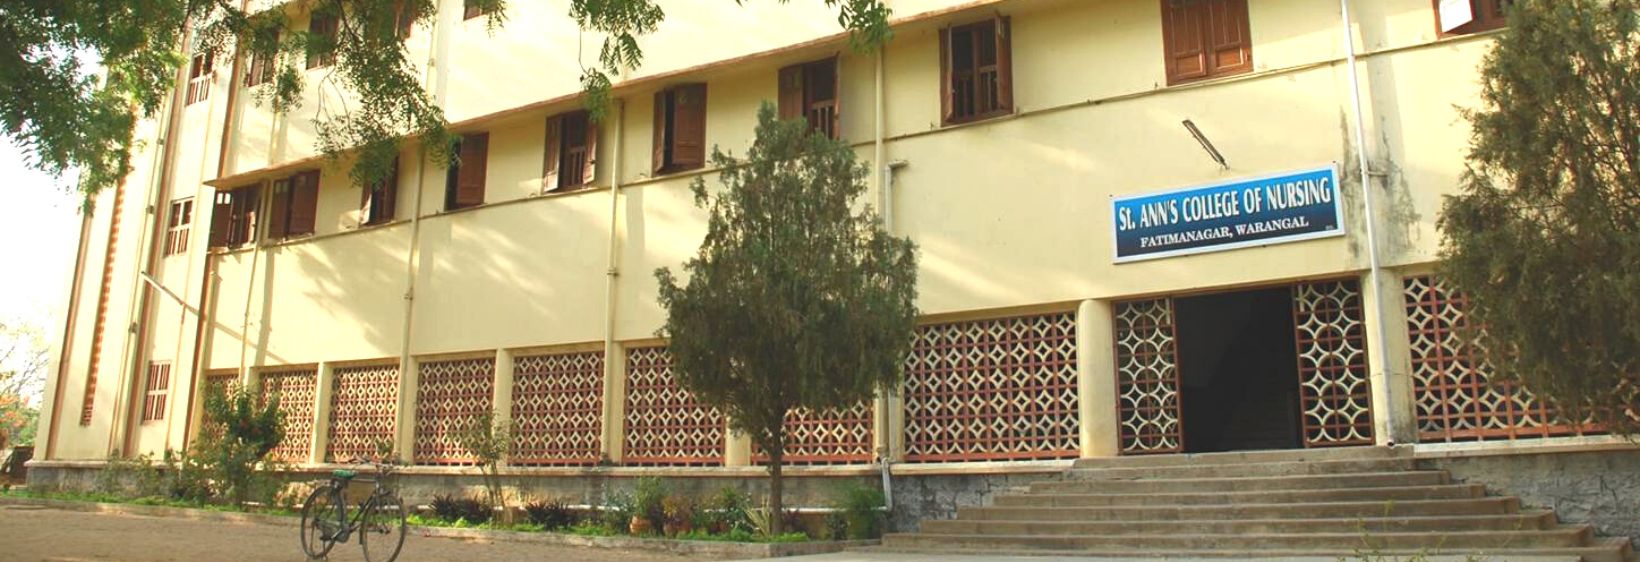 St. Ann's College of Nursing - Warangal